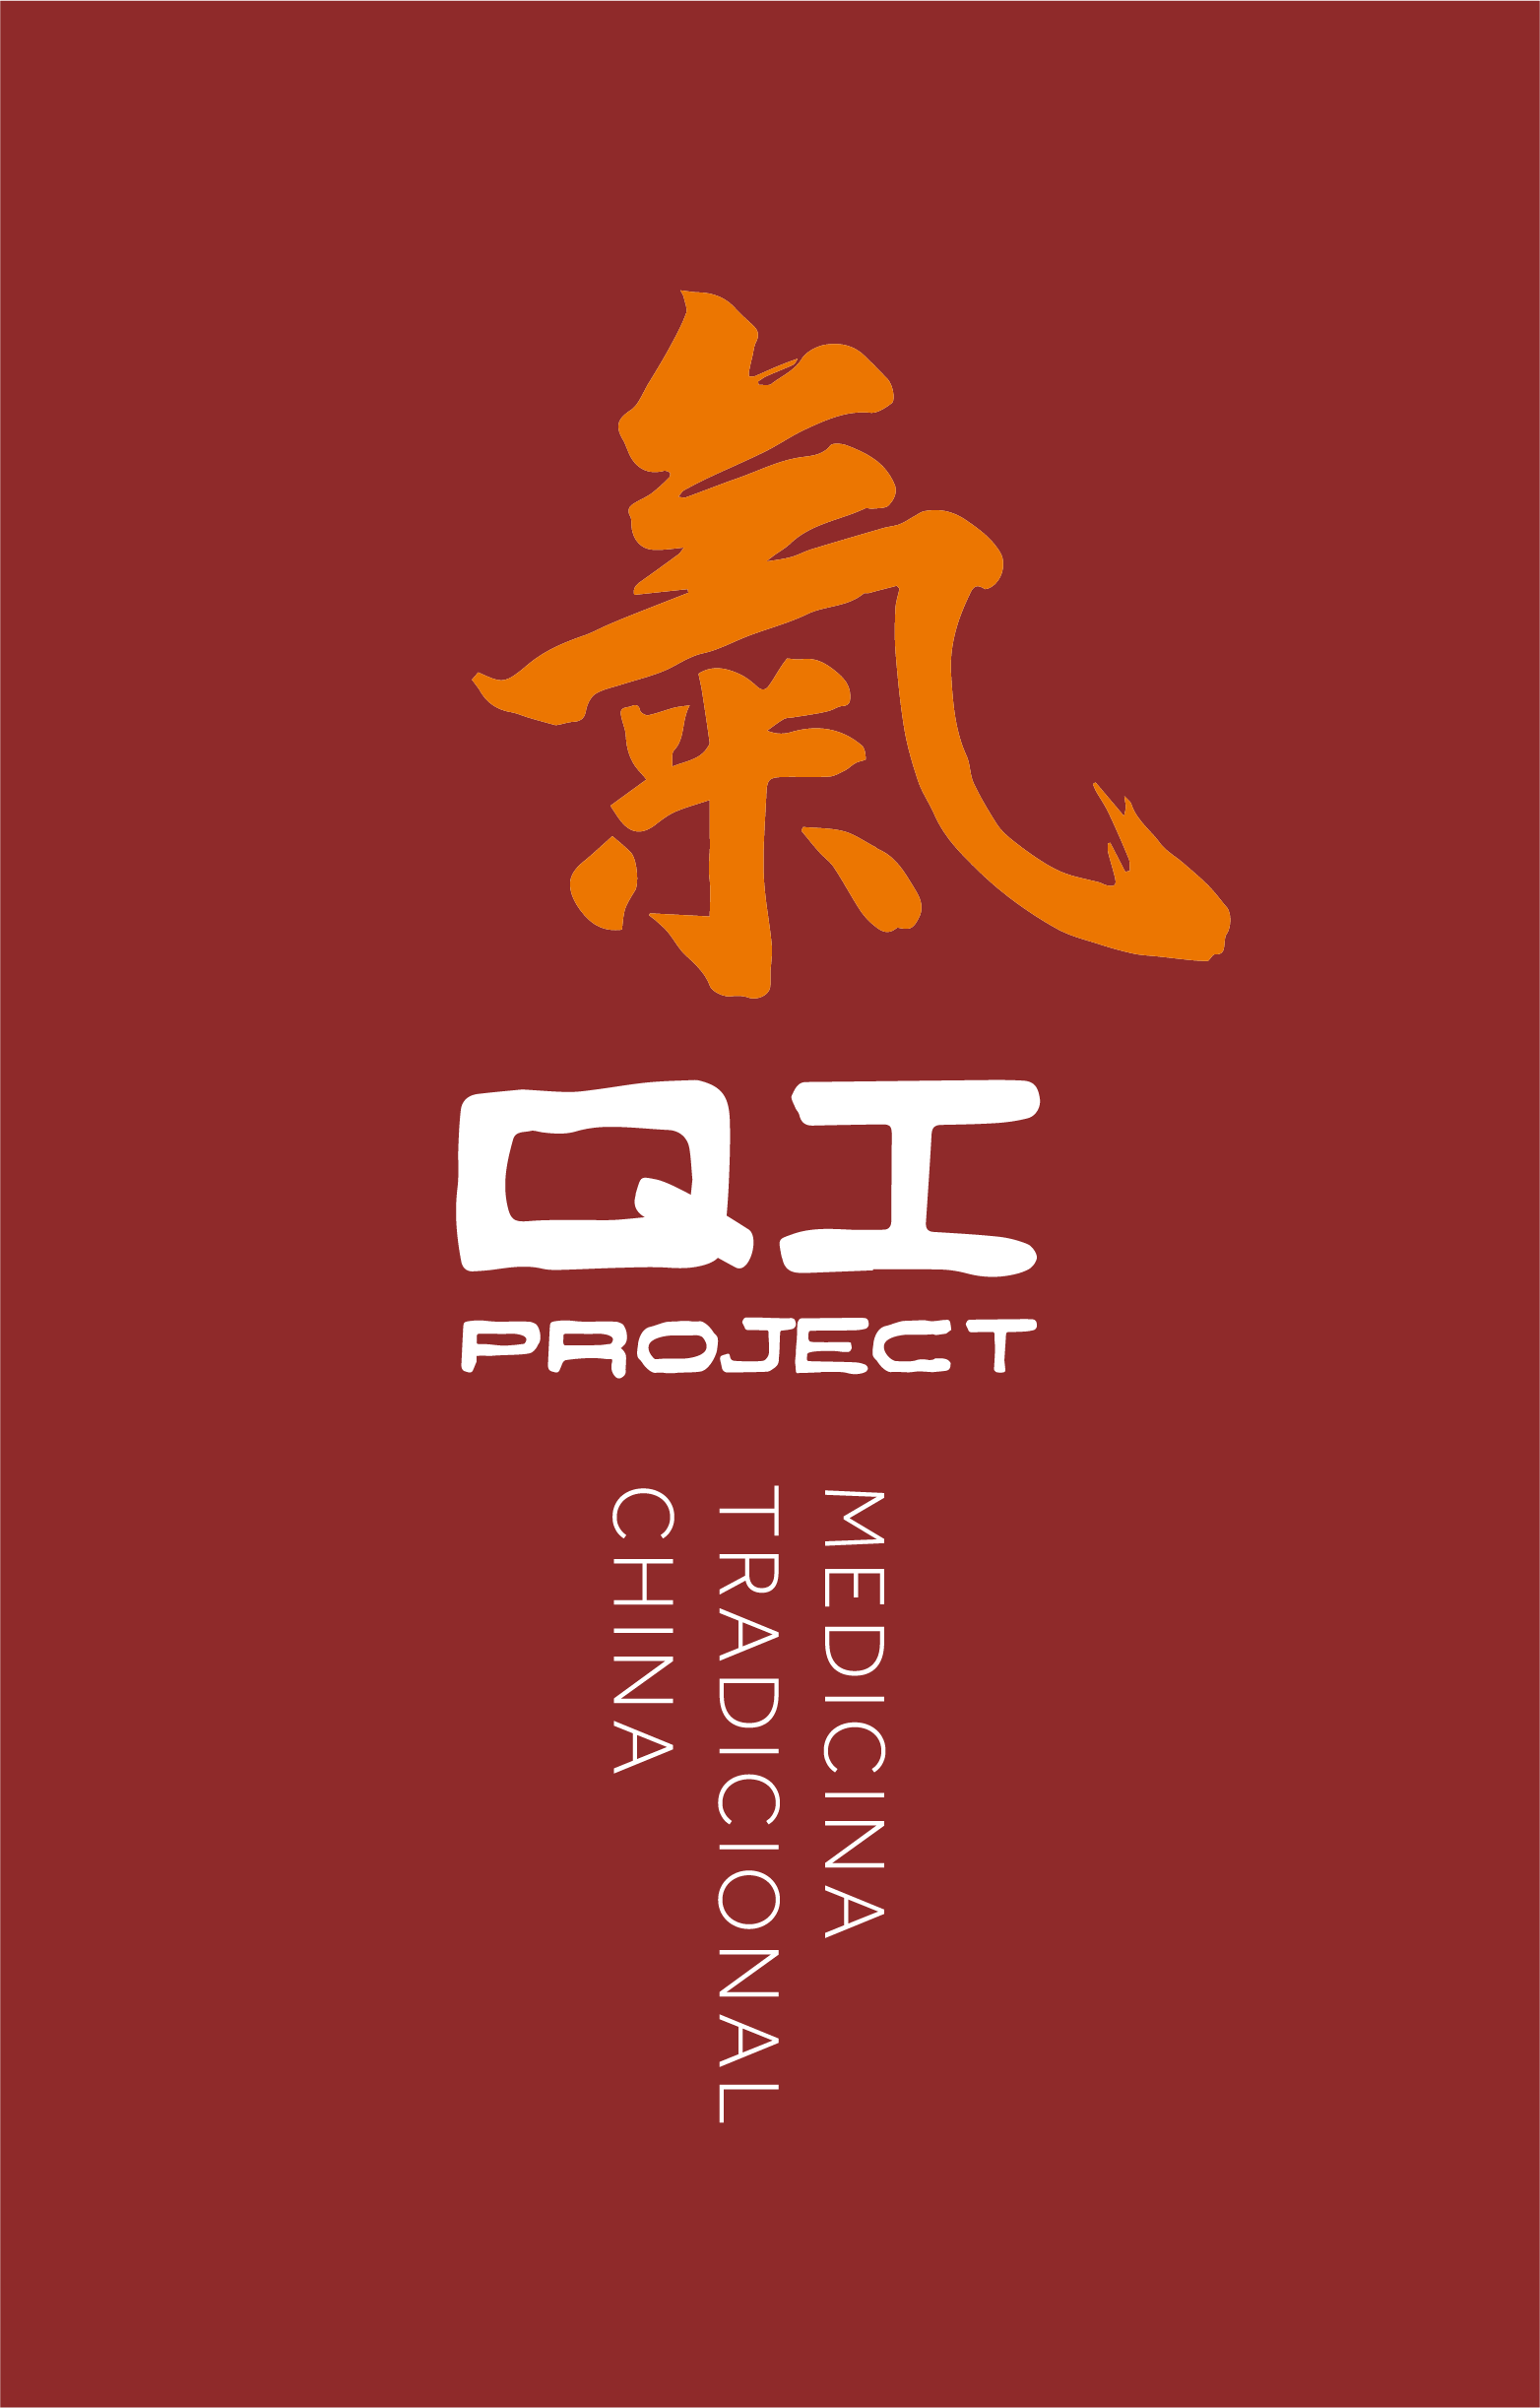 Qi project